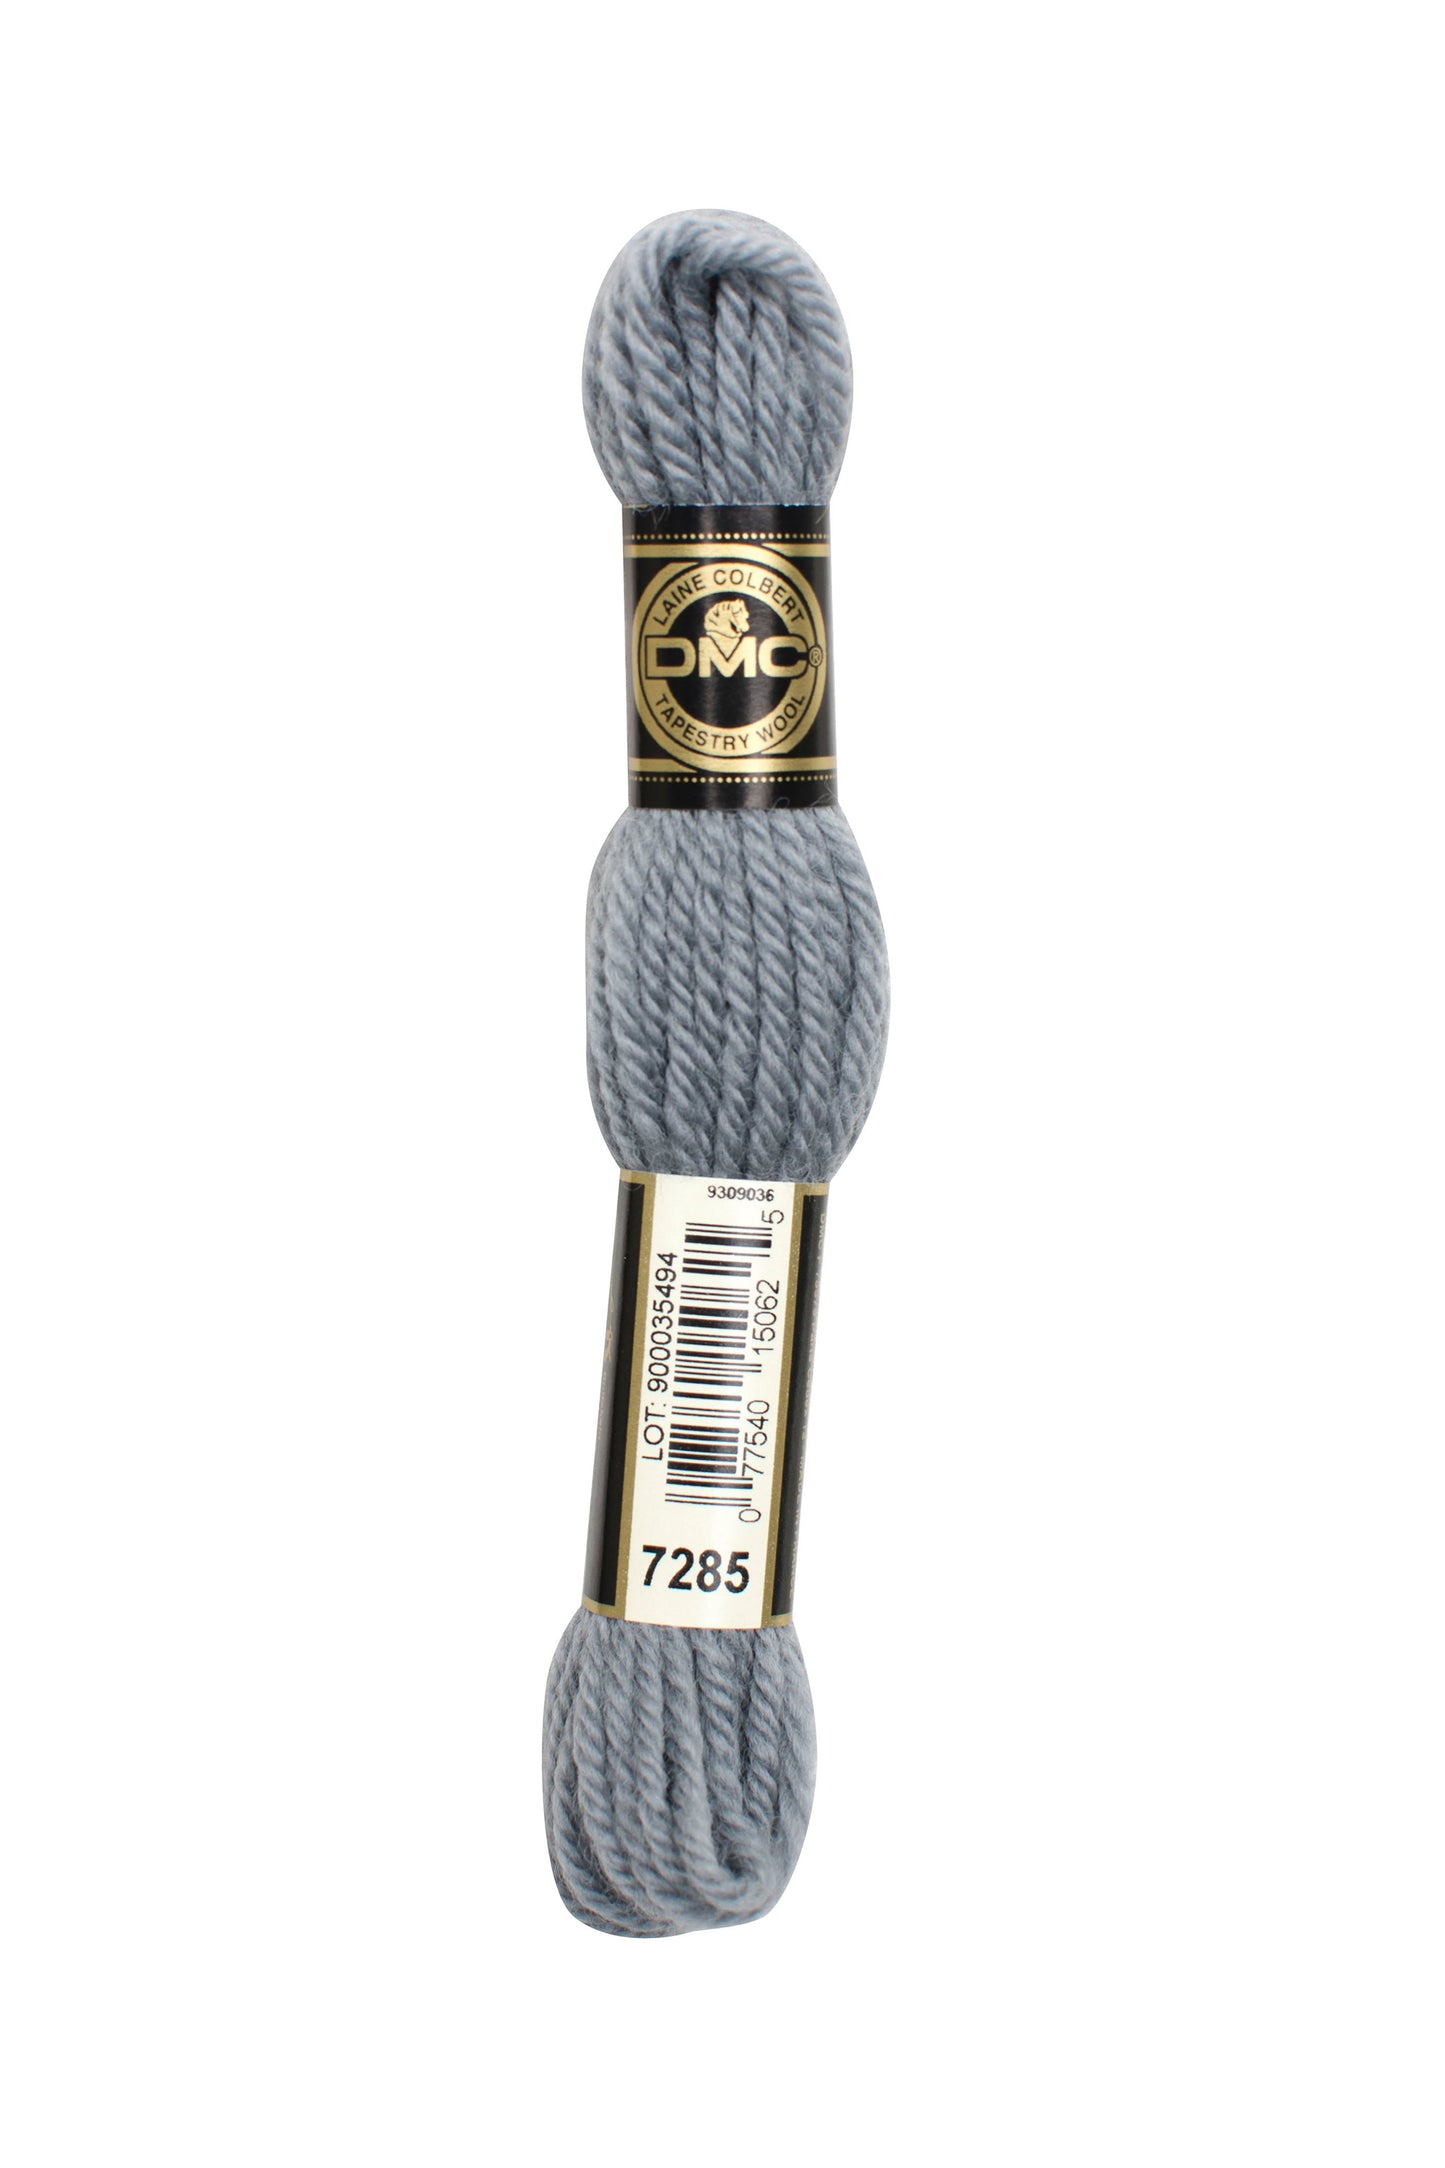 7285 – DMC Tapestry Wool